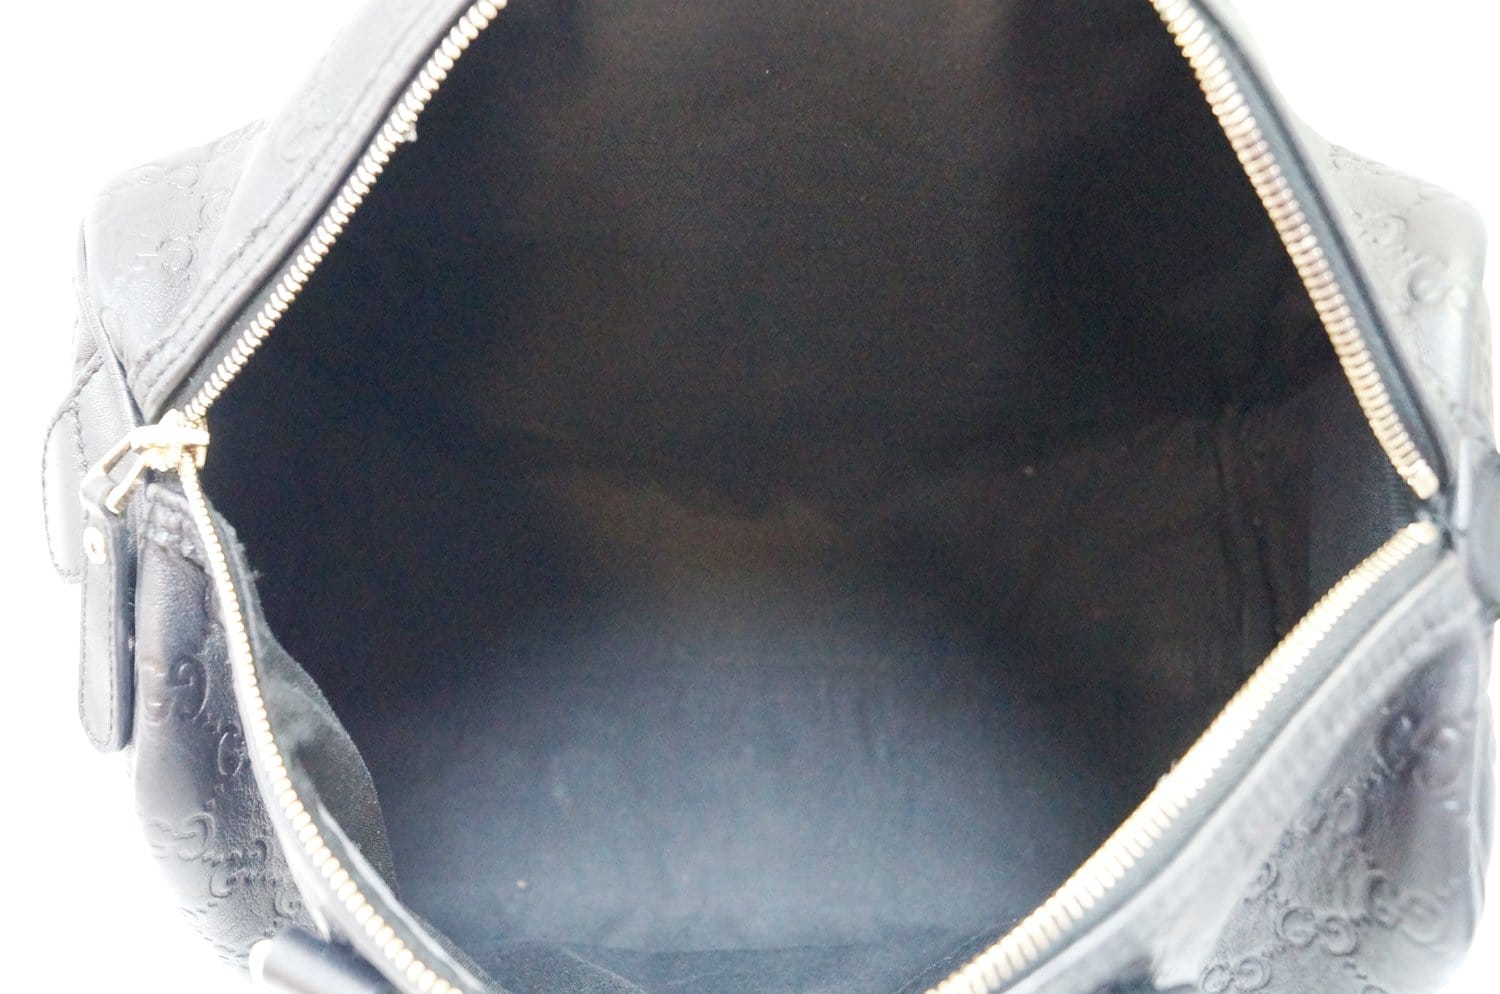 Gucci Microguccissima GG Black Leather Embossed Boston Bag